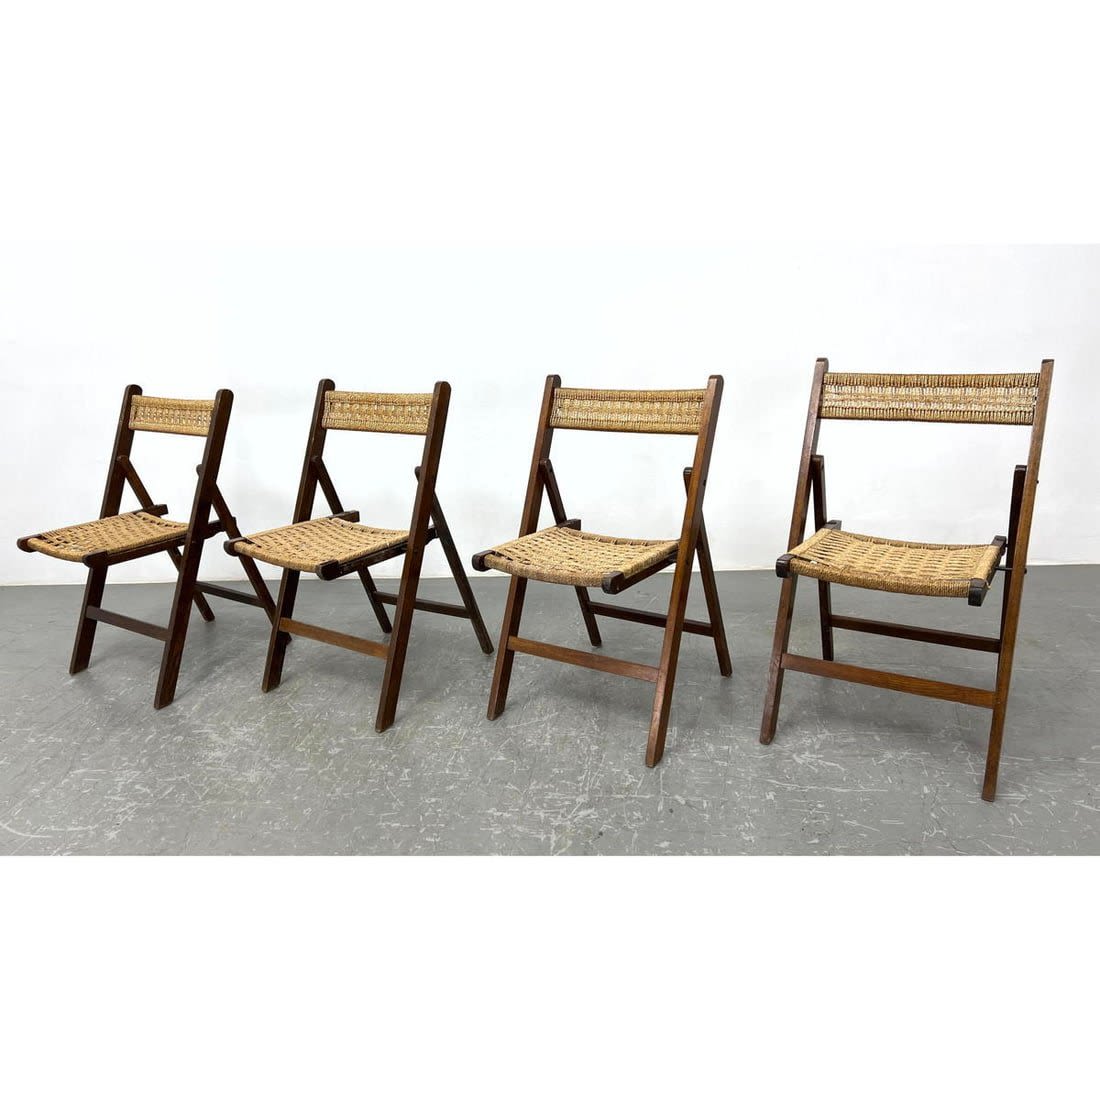 Set 4 Woven Rush Seats Wood Frame